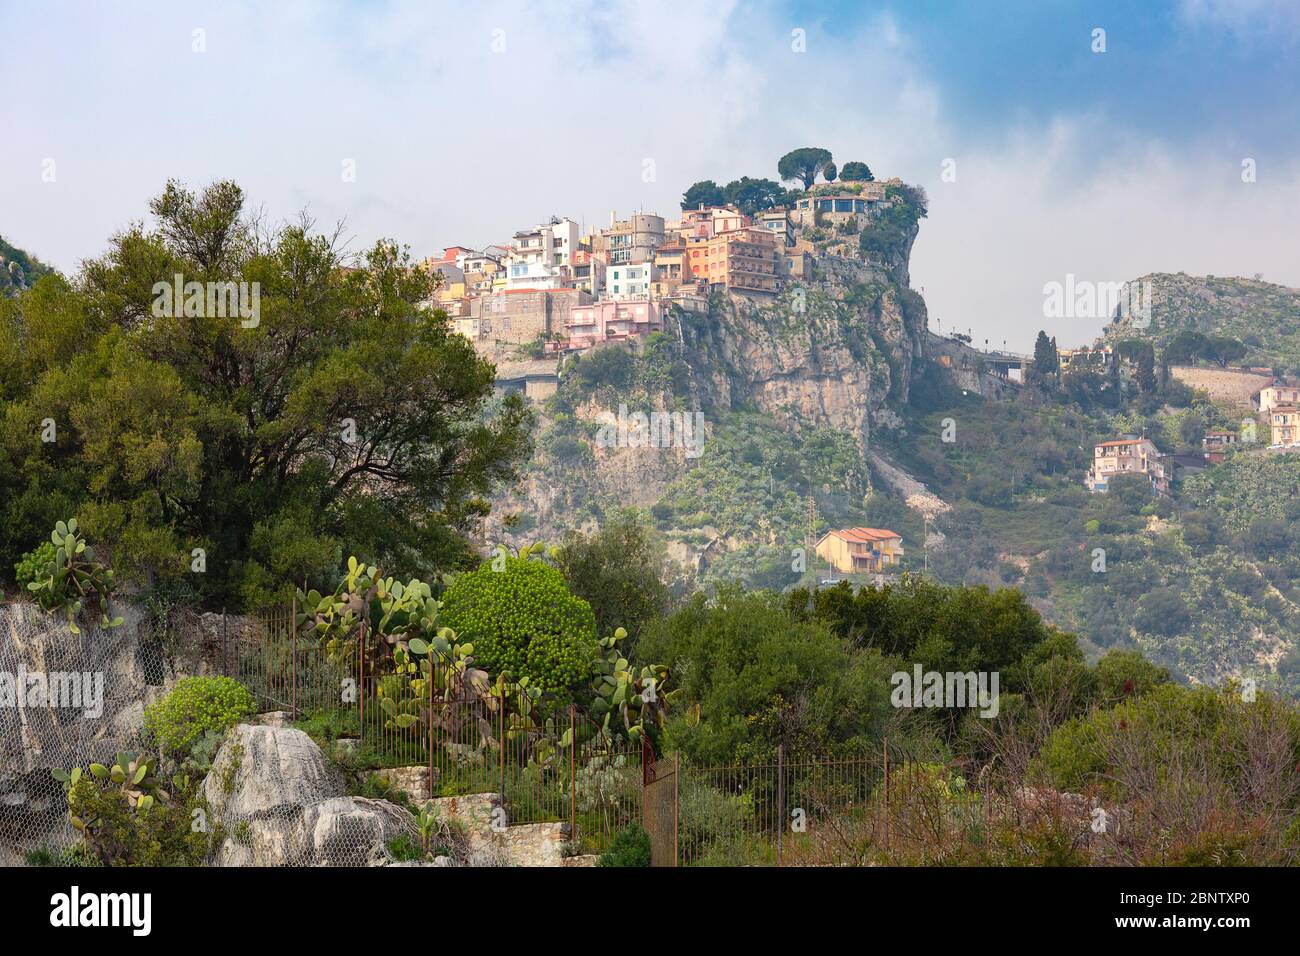 Mountain village Castelmola in the Italian region Sicily in sunny day as seen from Taormina, Italy Stock Photo